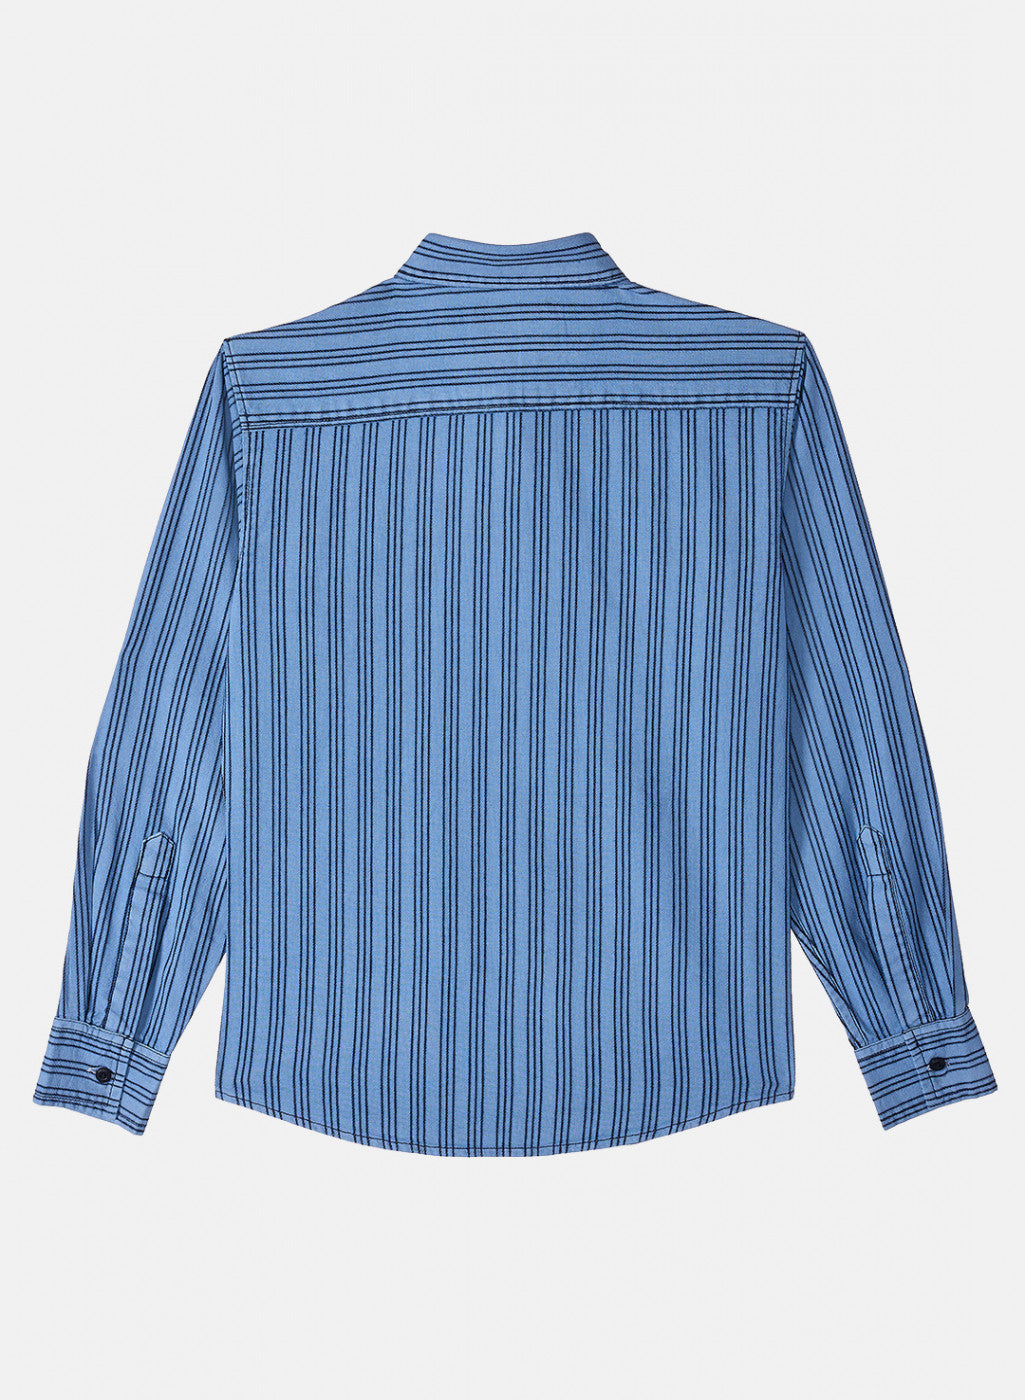 Boys Blue Stripe Shirt